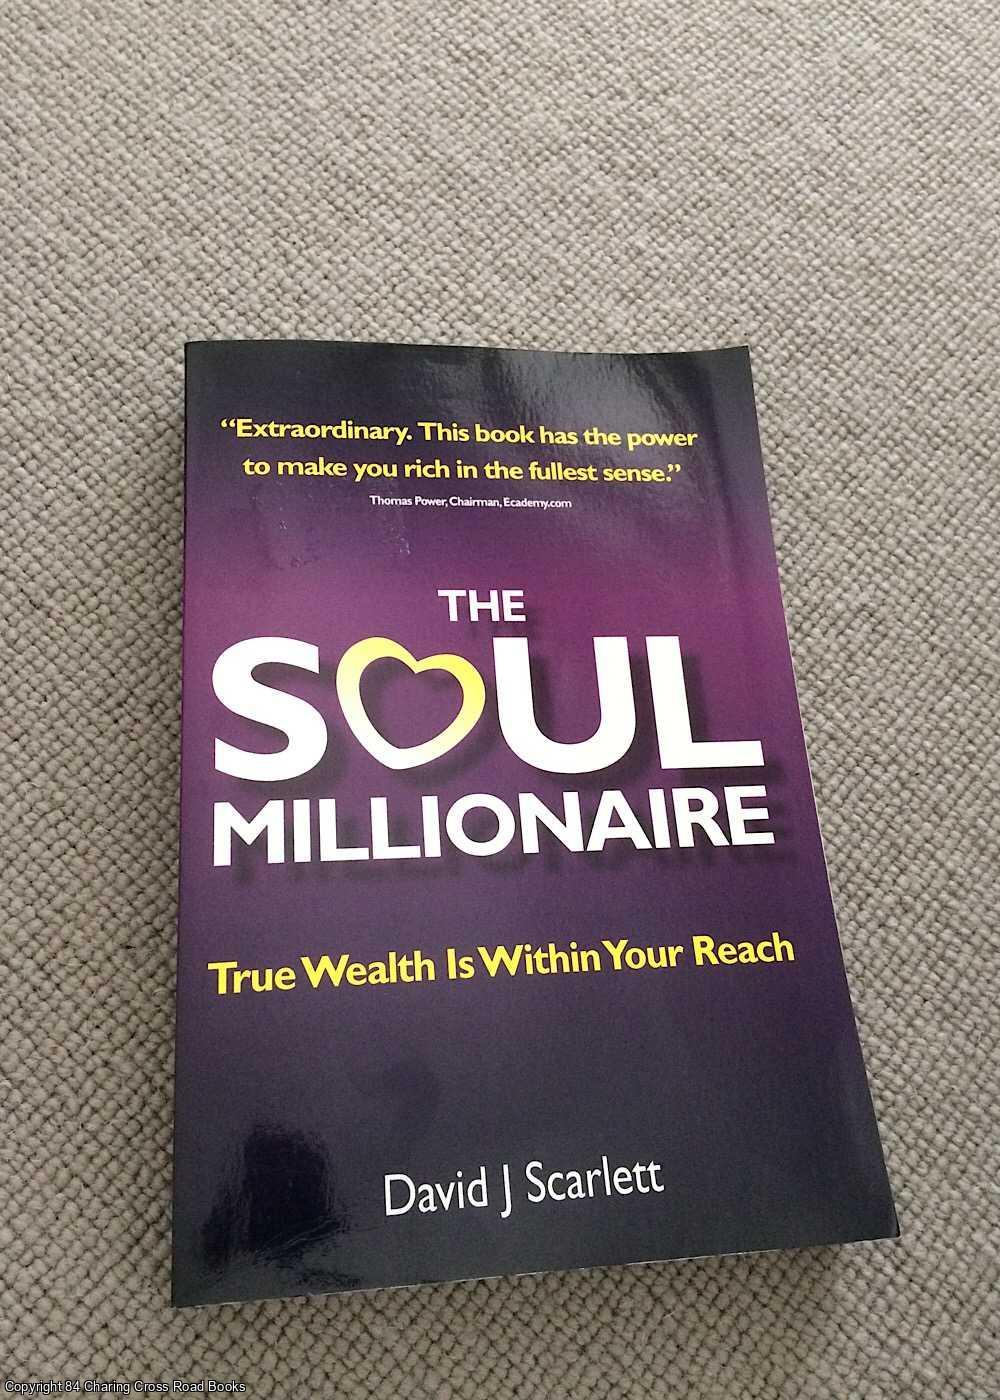 Scarlett, David J. - The Soul Millionaire - True Wealth Is Within Your Reach